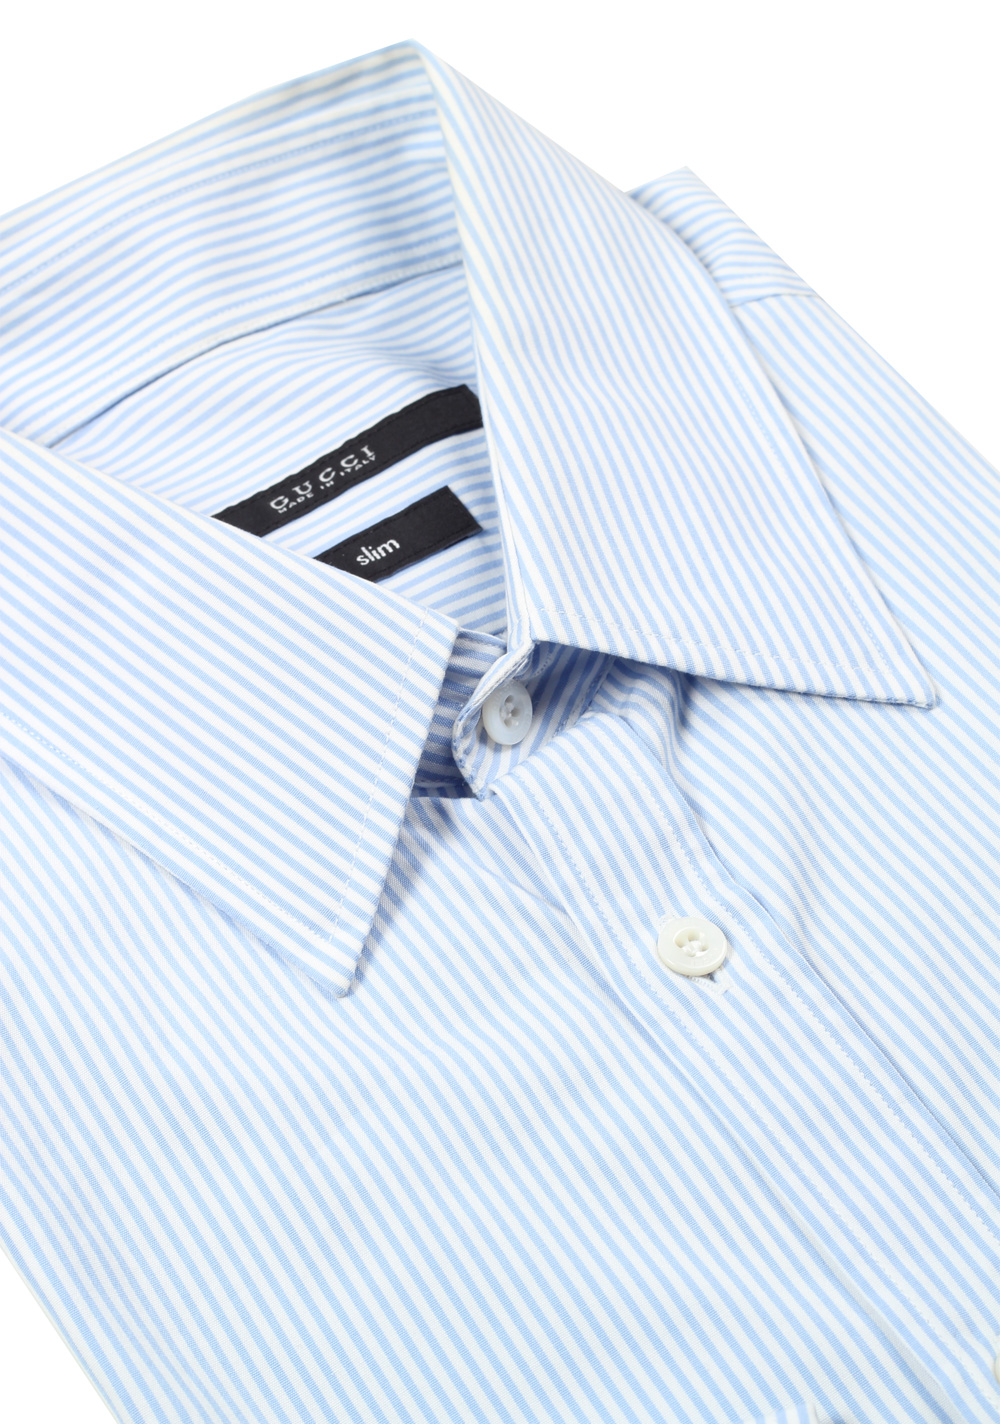 Gucci Striped Blue White Dress Shirt Size 39 / 15,5 U.S. Slim | Costume Limité